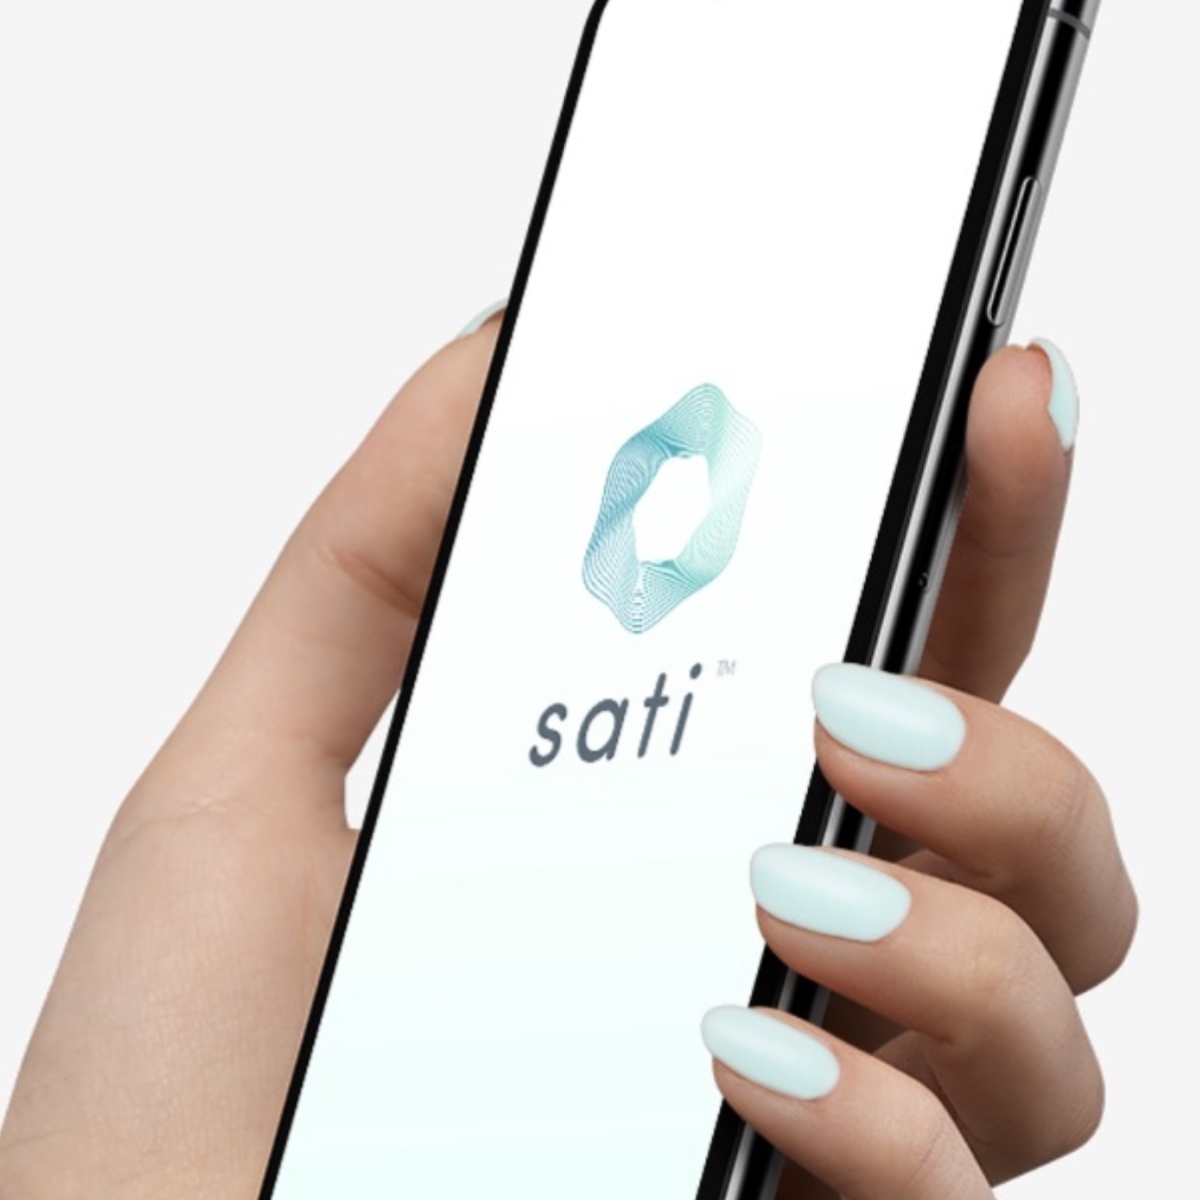 Sati app